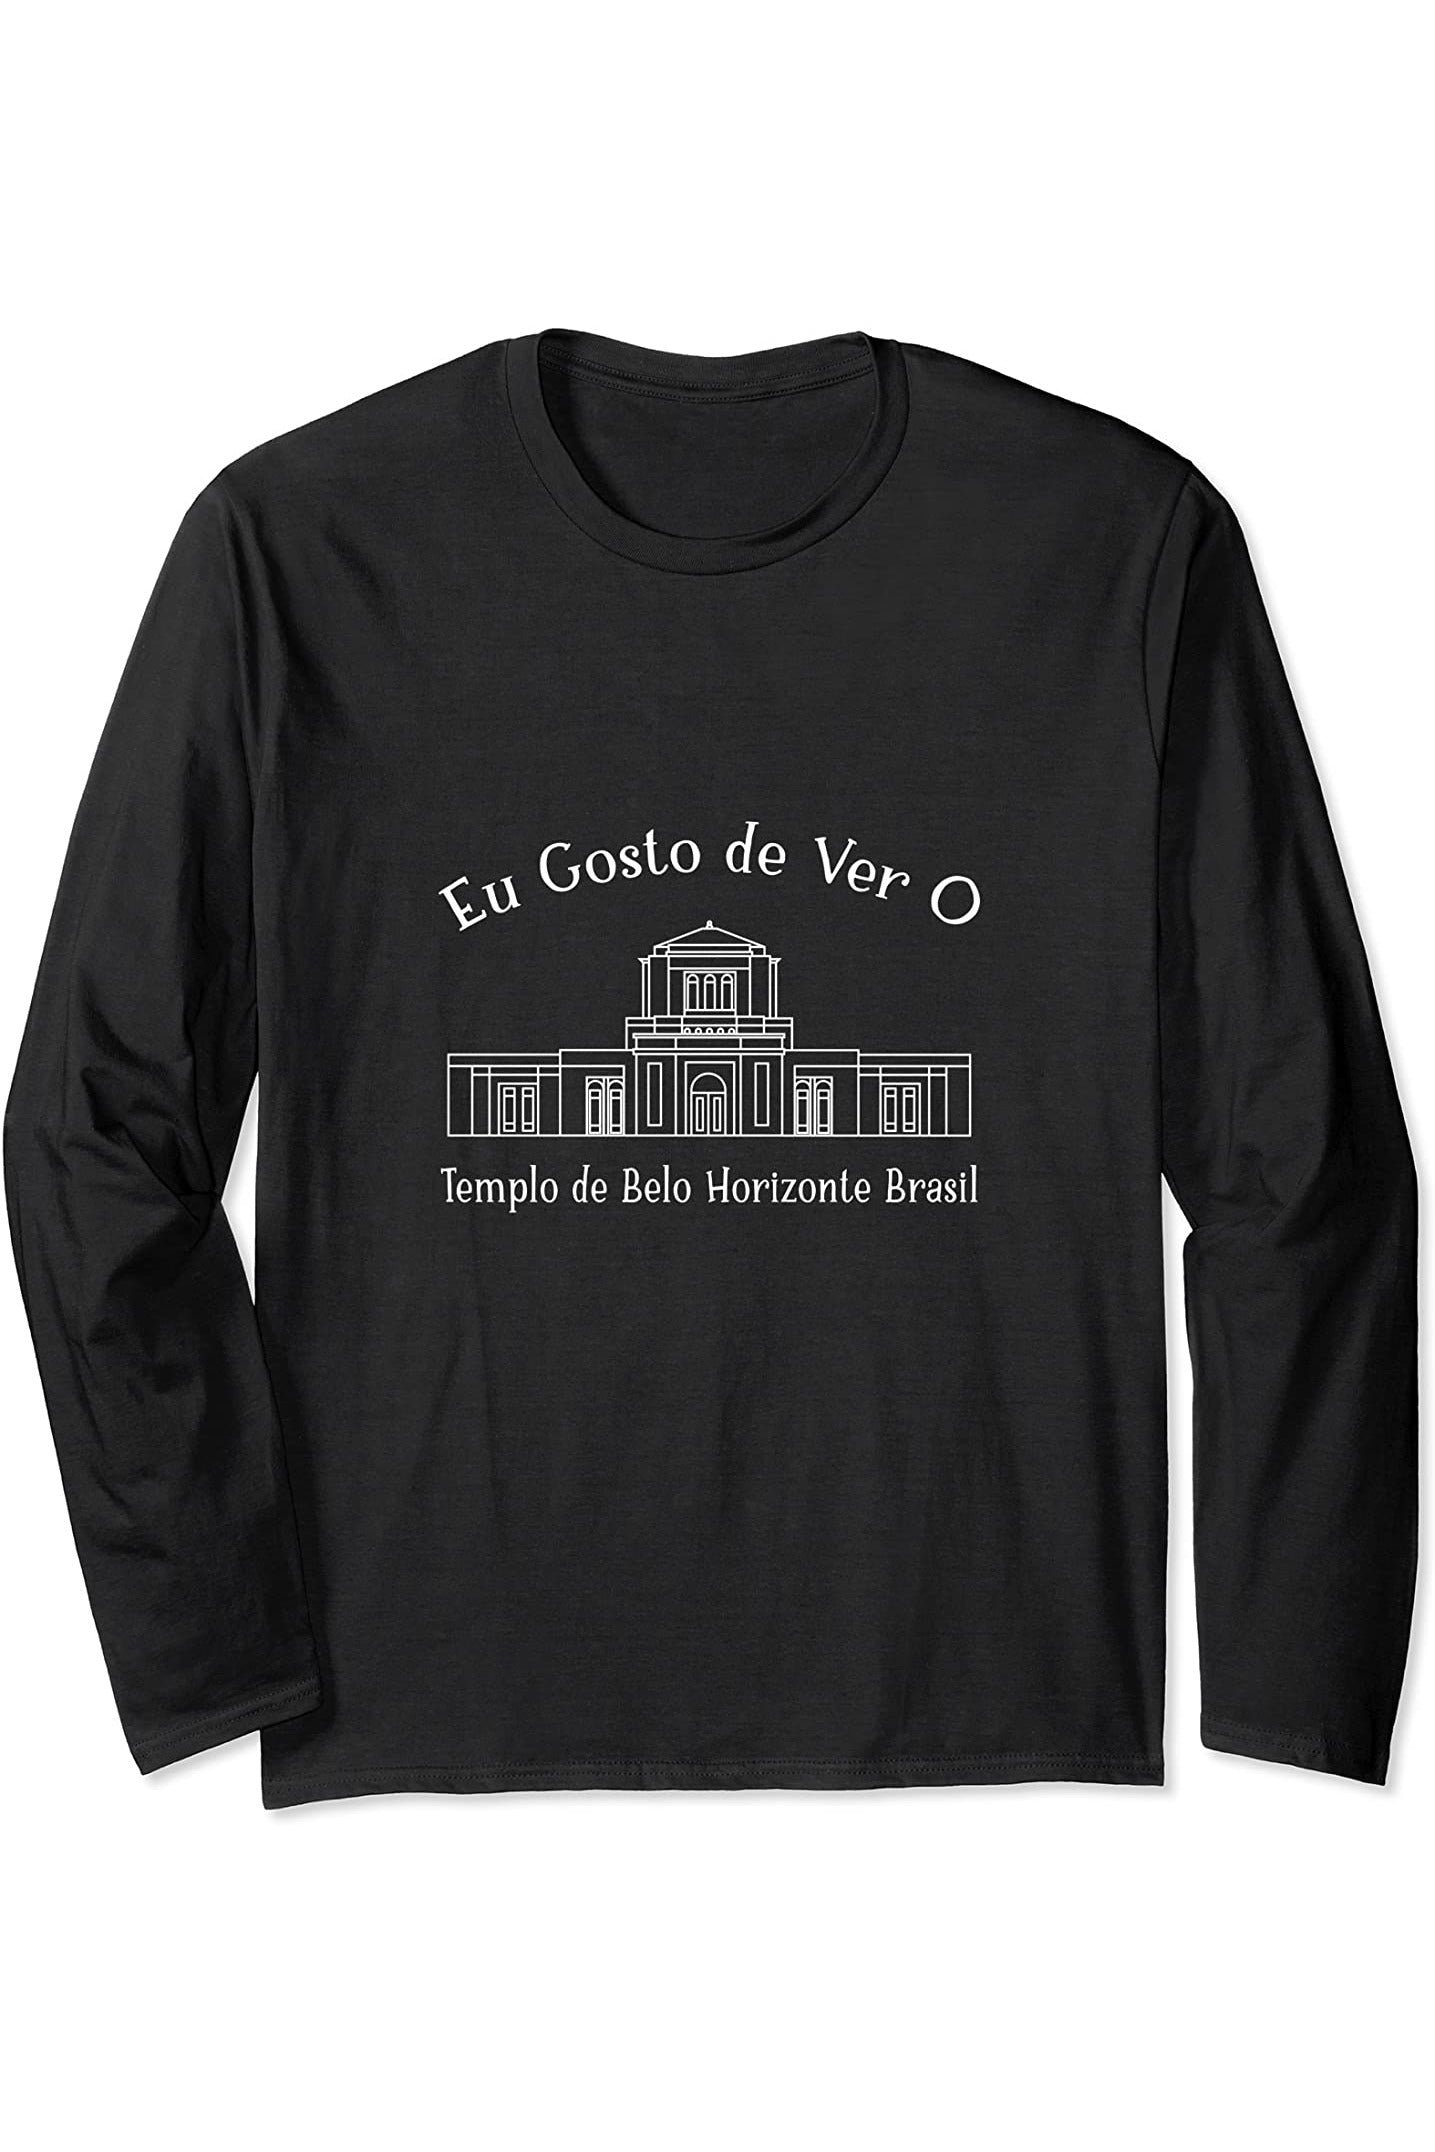 Belo Horizonte Brazil Temple Long Sleeve T-Shirt - Happy Style (Portuguese) US